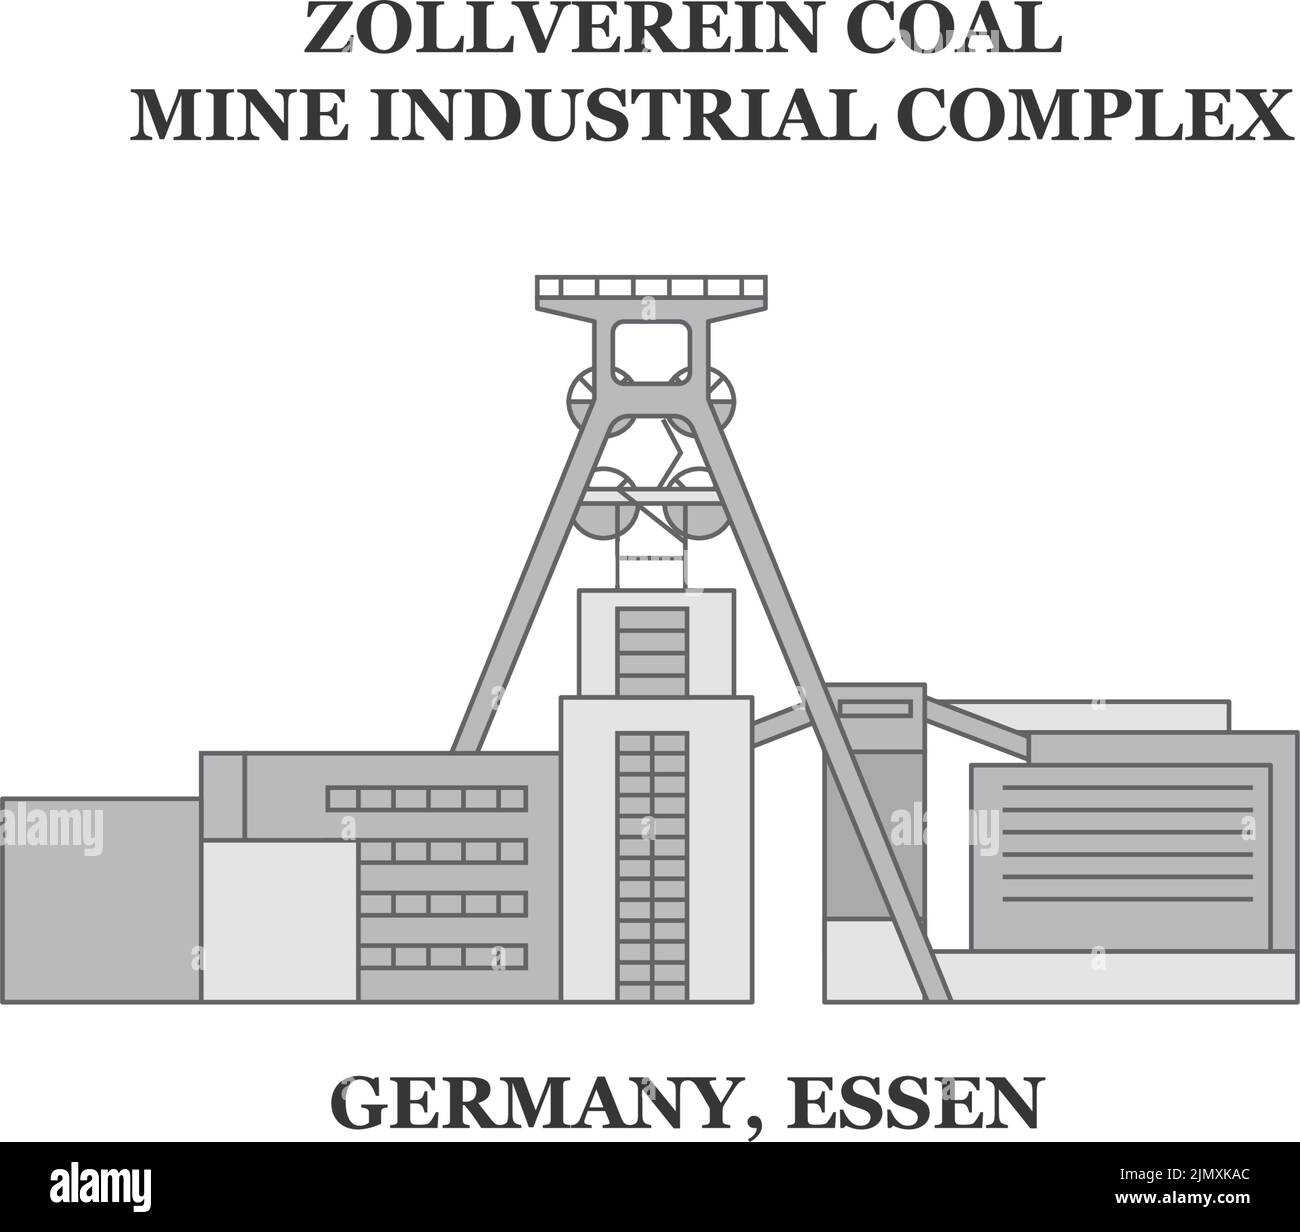 Germania, Essen, Zollverein Coal Mine Industrial Complex City skyline isolato vettore illustrazione, icone Illustrazione Vettoriale